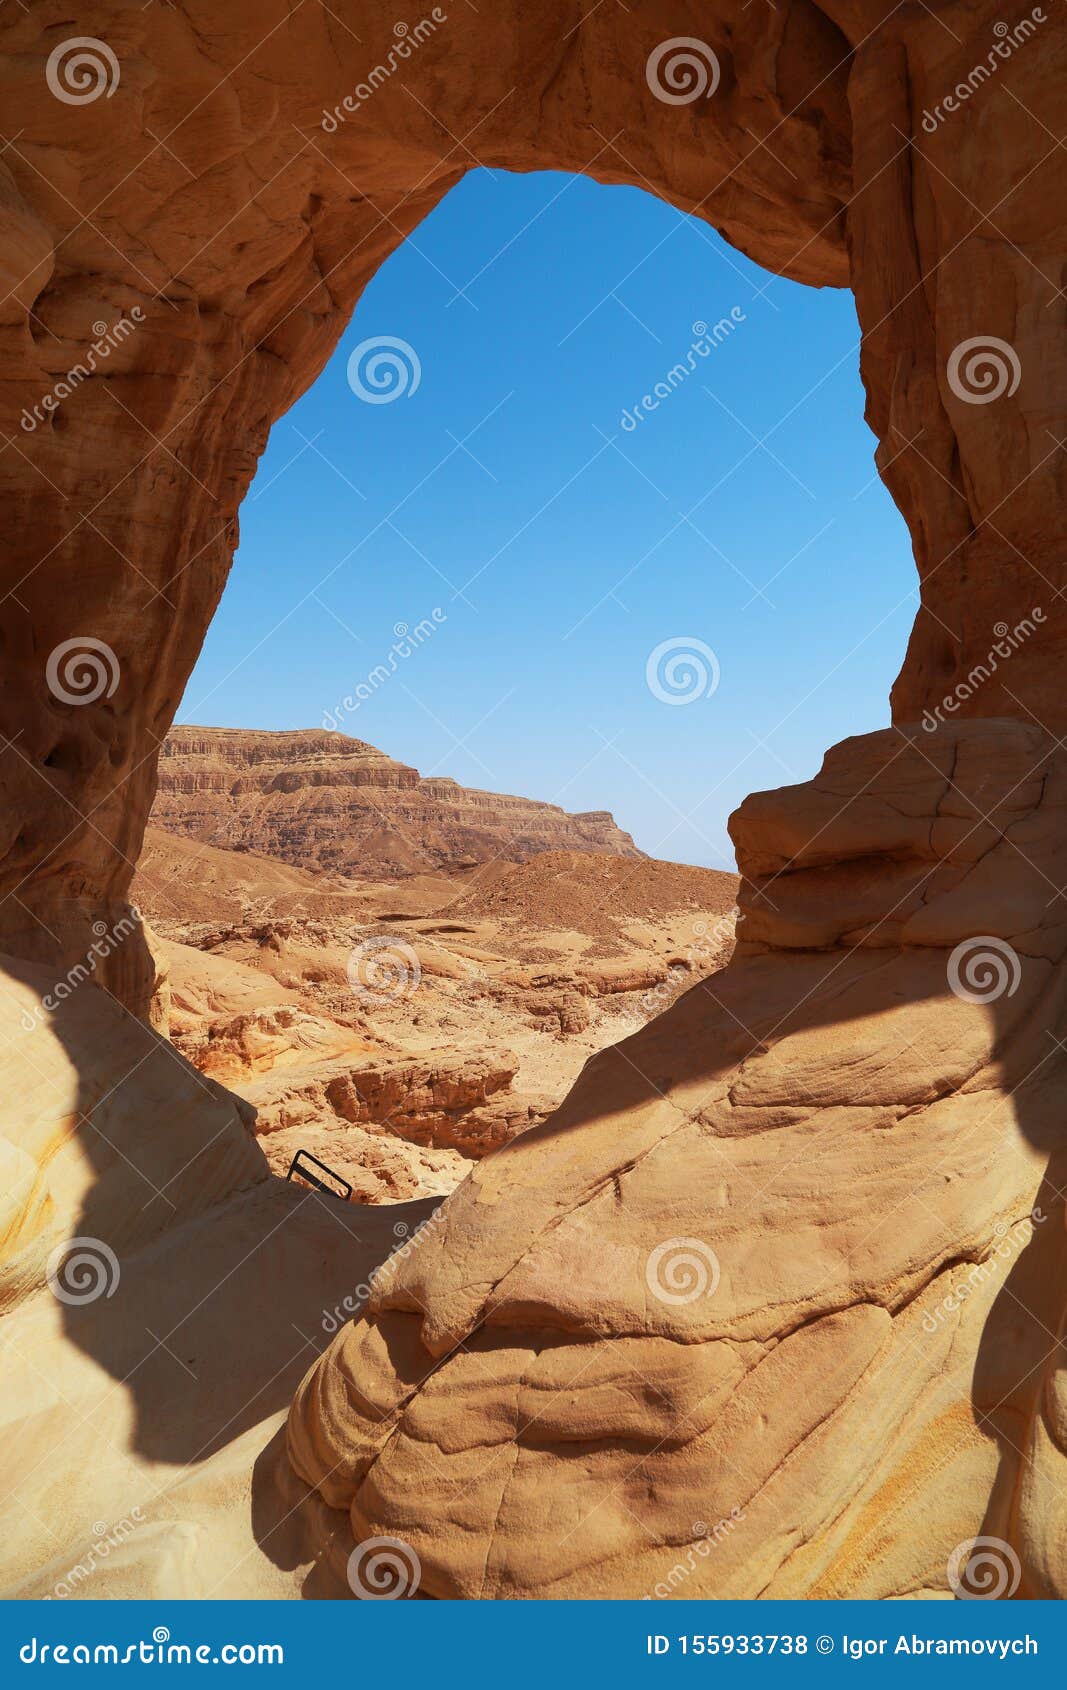 arava desert landscape through an erosive stone window in a rock, israel